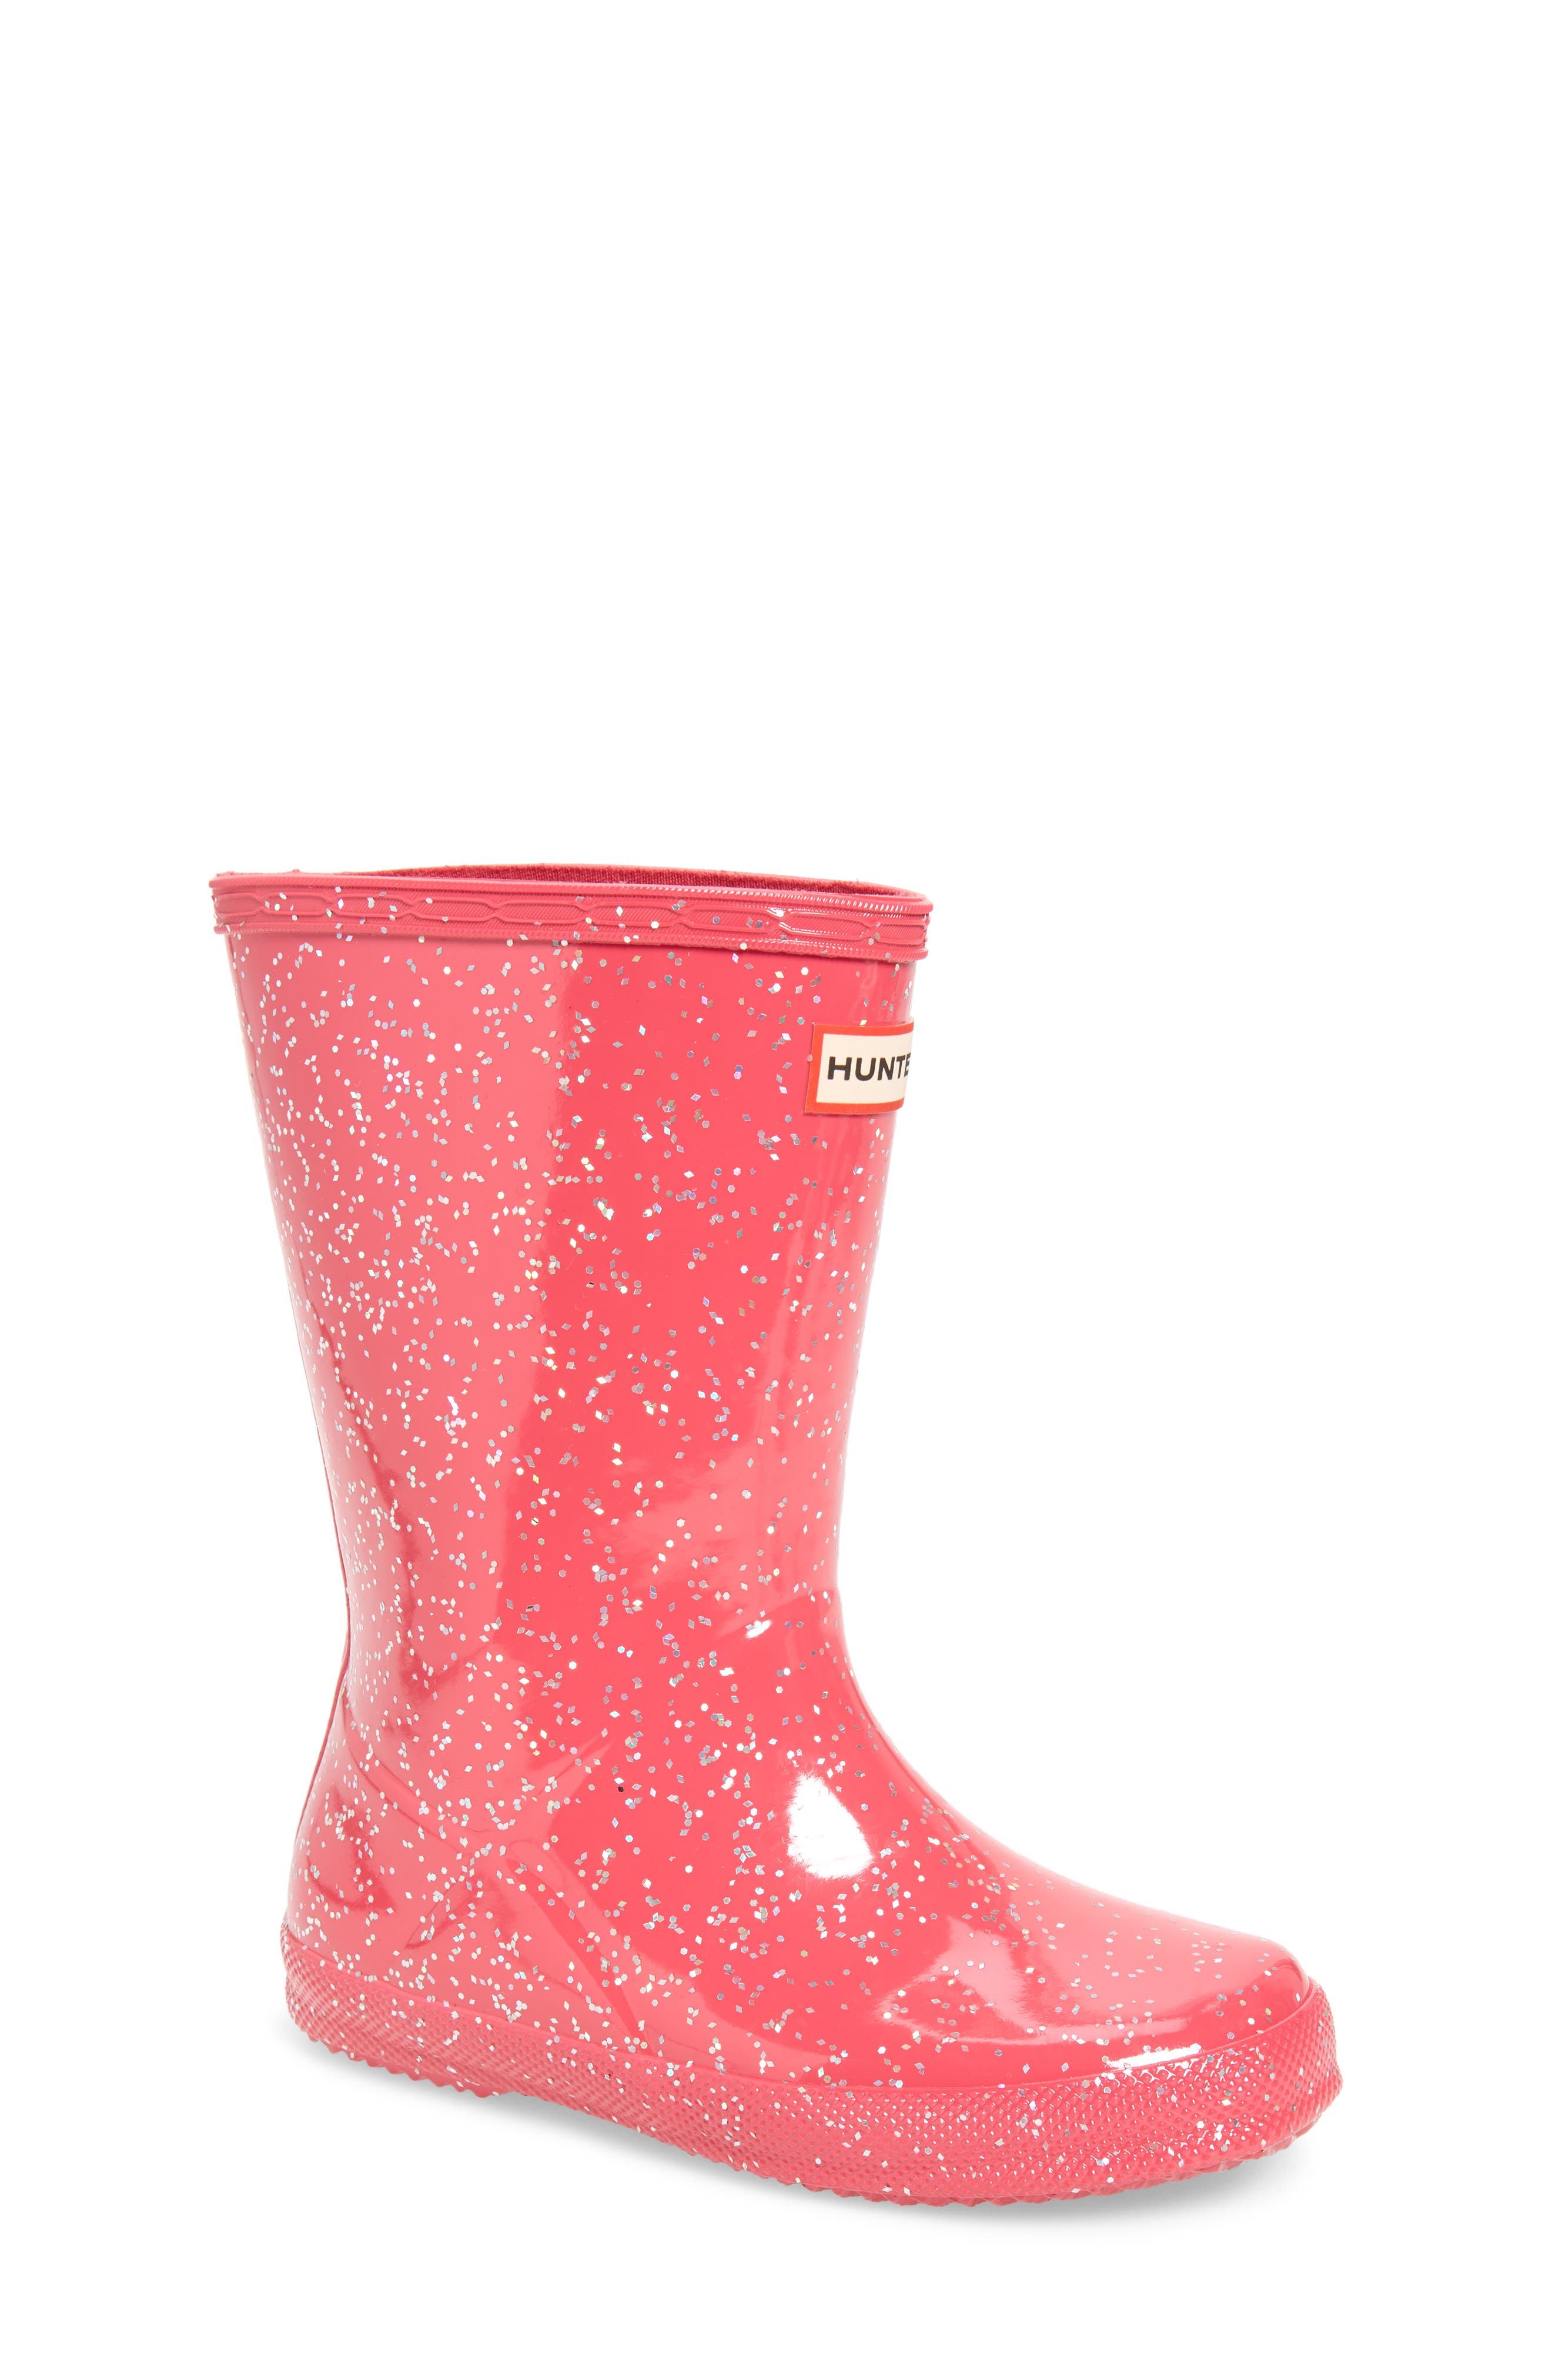 New Crane Girls Pink Snow Boots Sizes: 9-13 